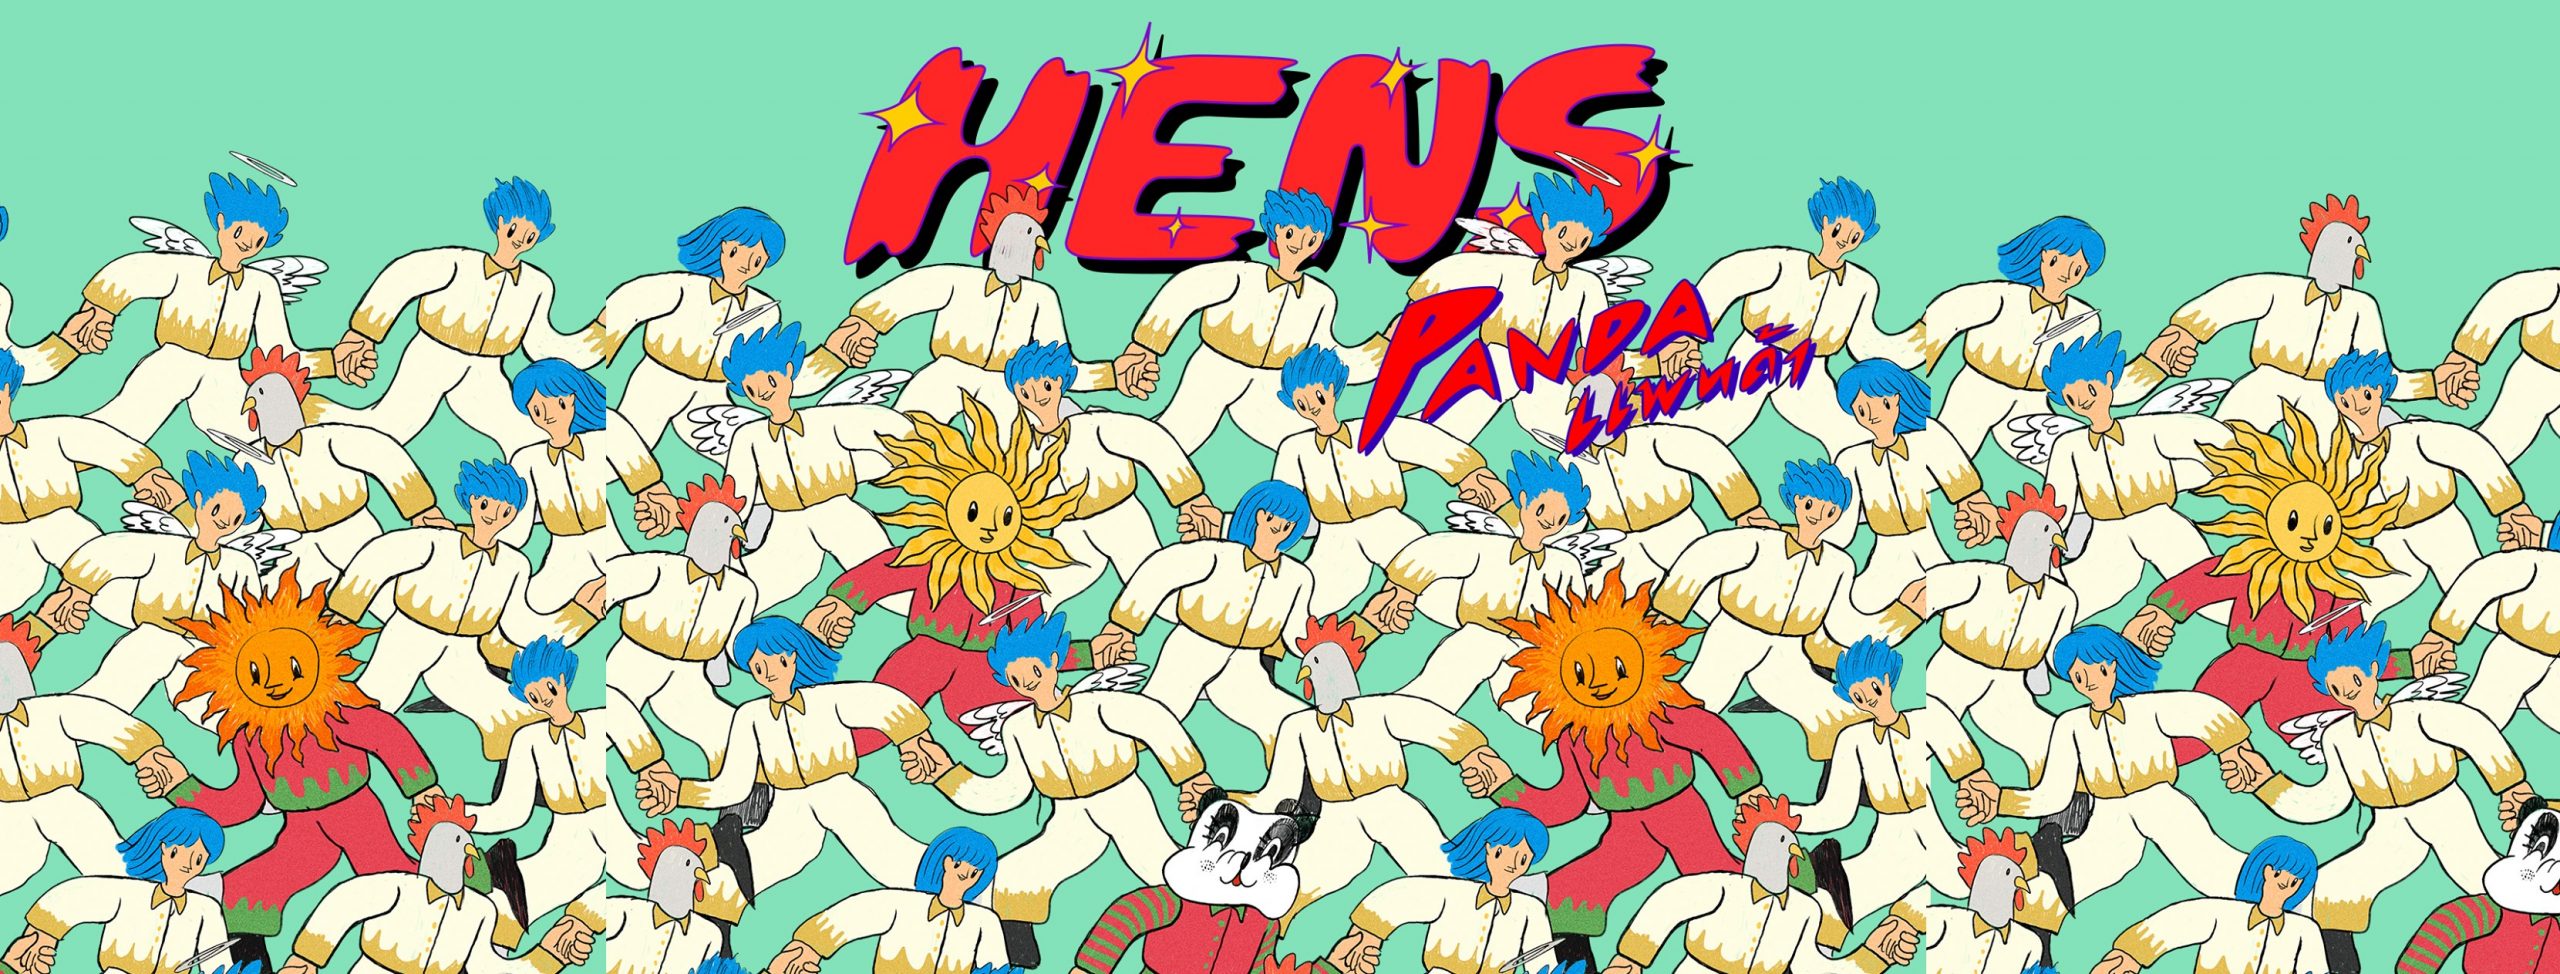 ‘HENS’ เปิดตัวซิงเกิ้ลแรก ‘Panda’ วงดนตรี Alternative-Pop ลำดับล่าสุดจากสังกัดค่าย What The Duck กับการเดินทางครั้งใหม่ของกลุ่มเพื่อนซี้